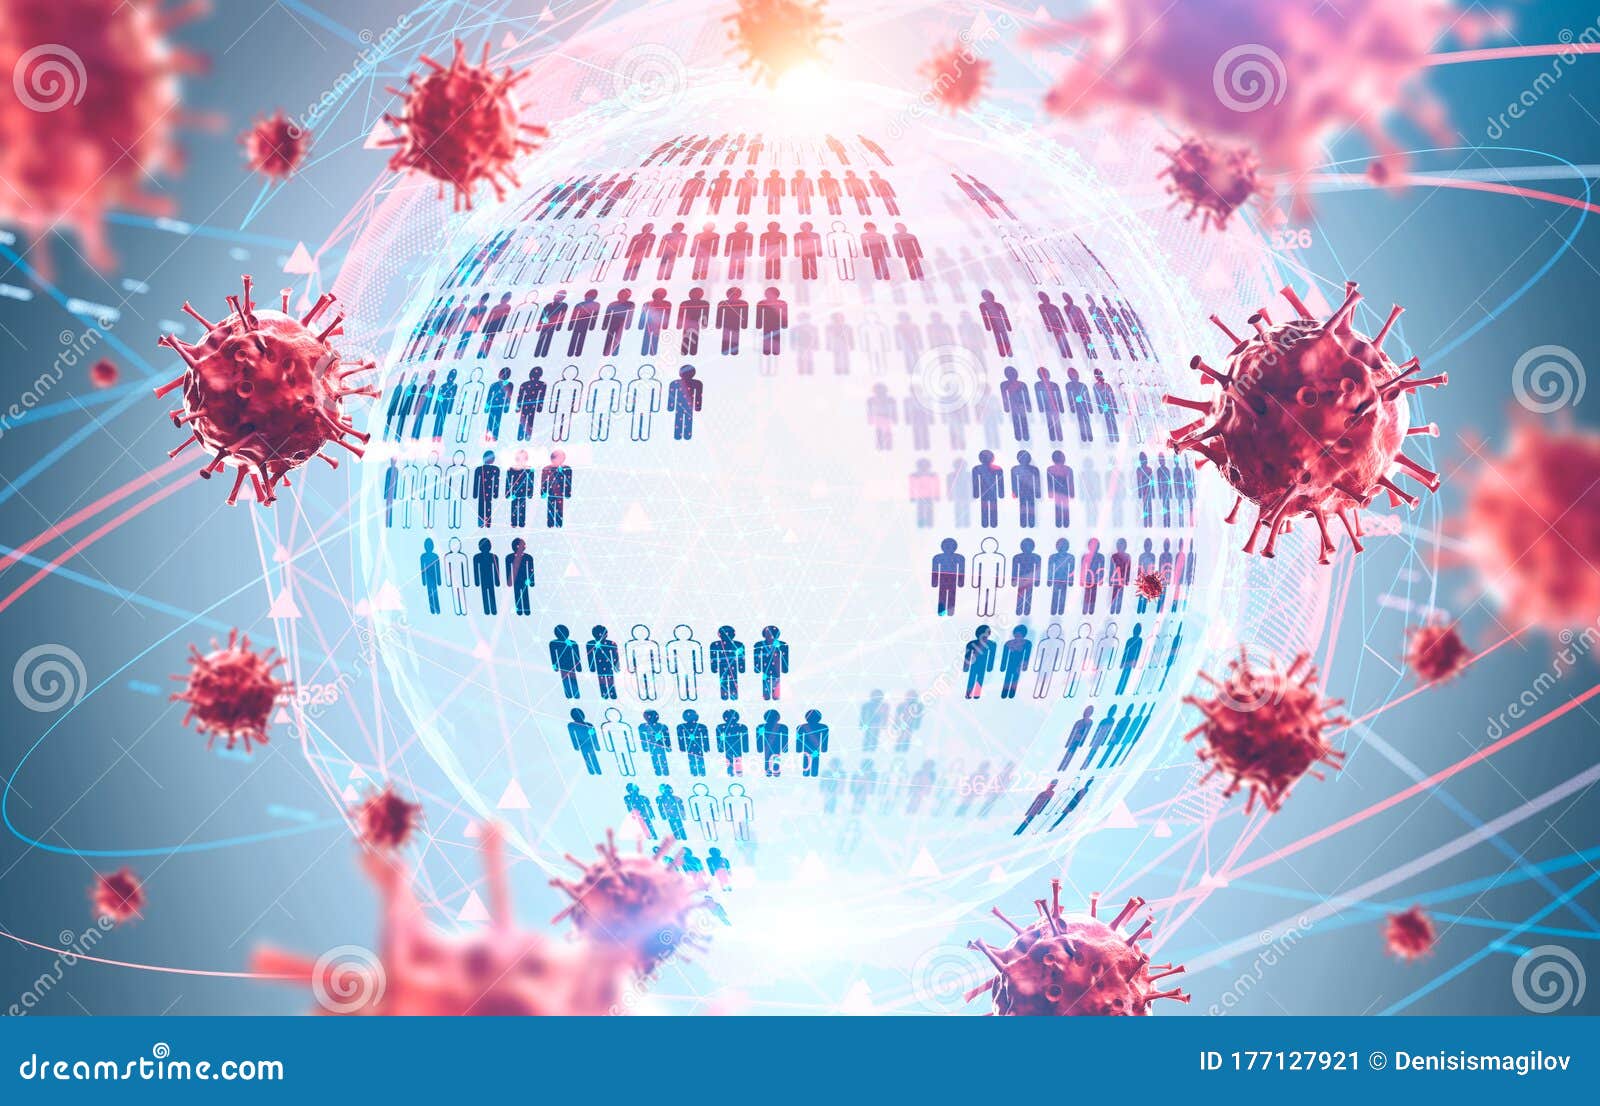 coronavirus pandemia concept, planet hologram